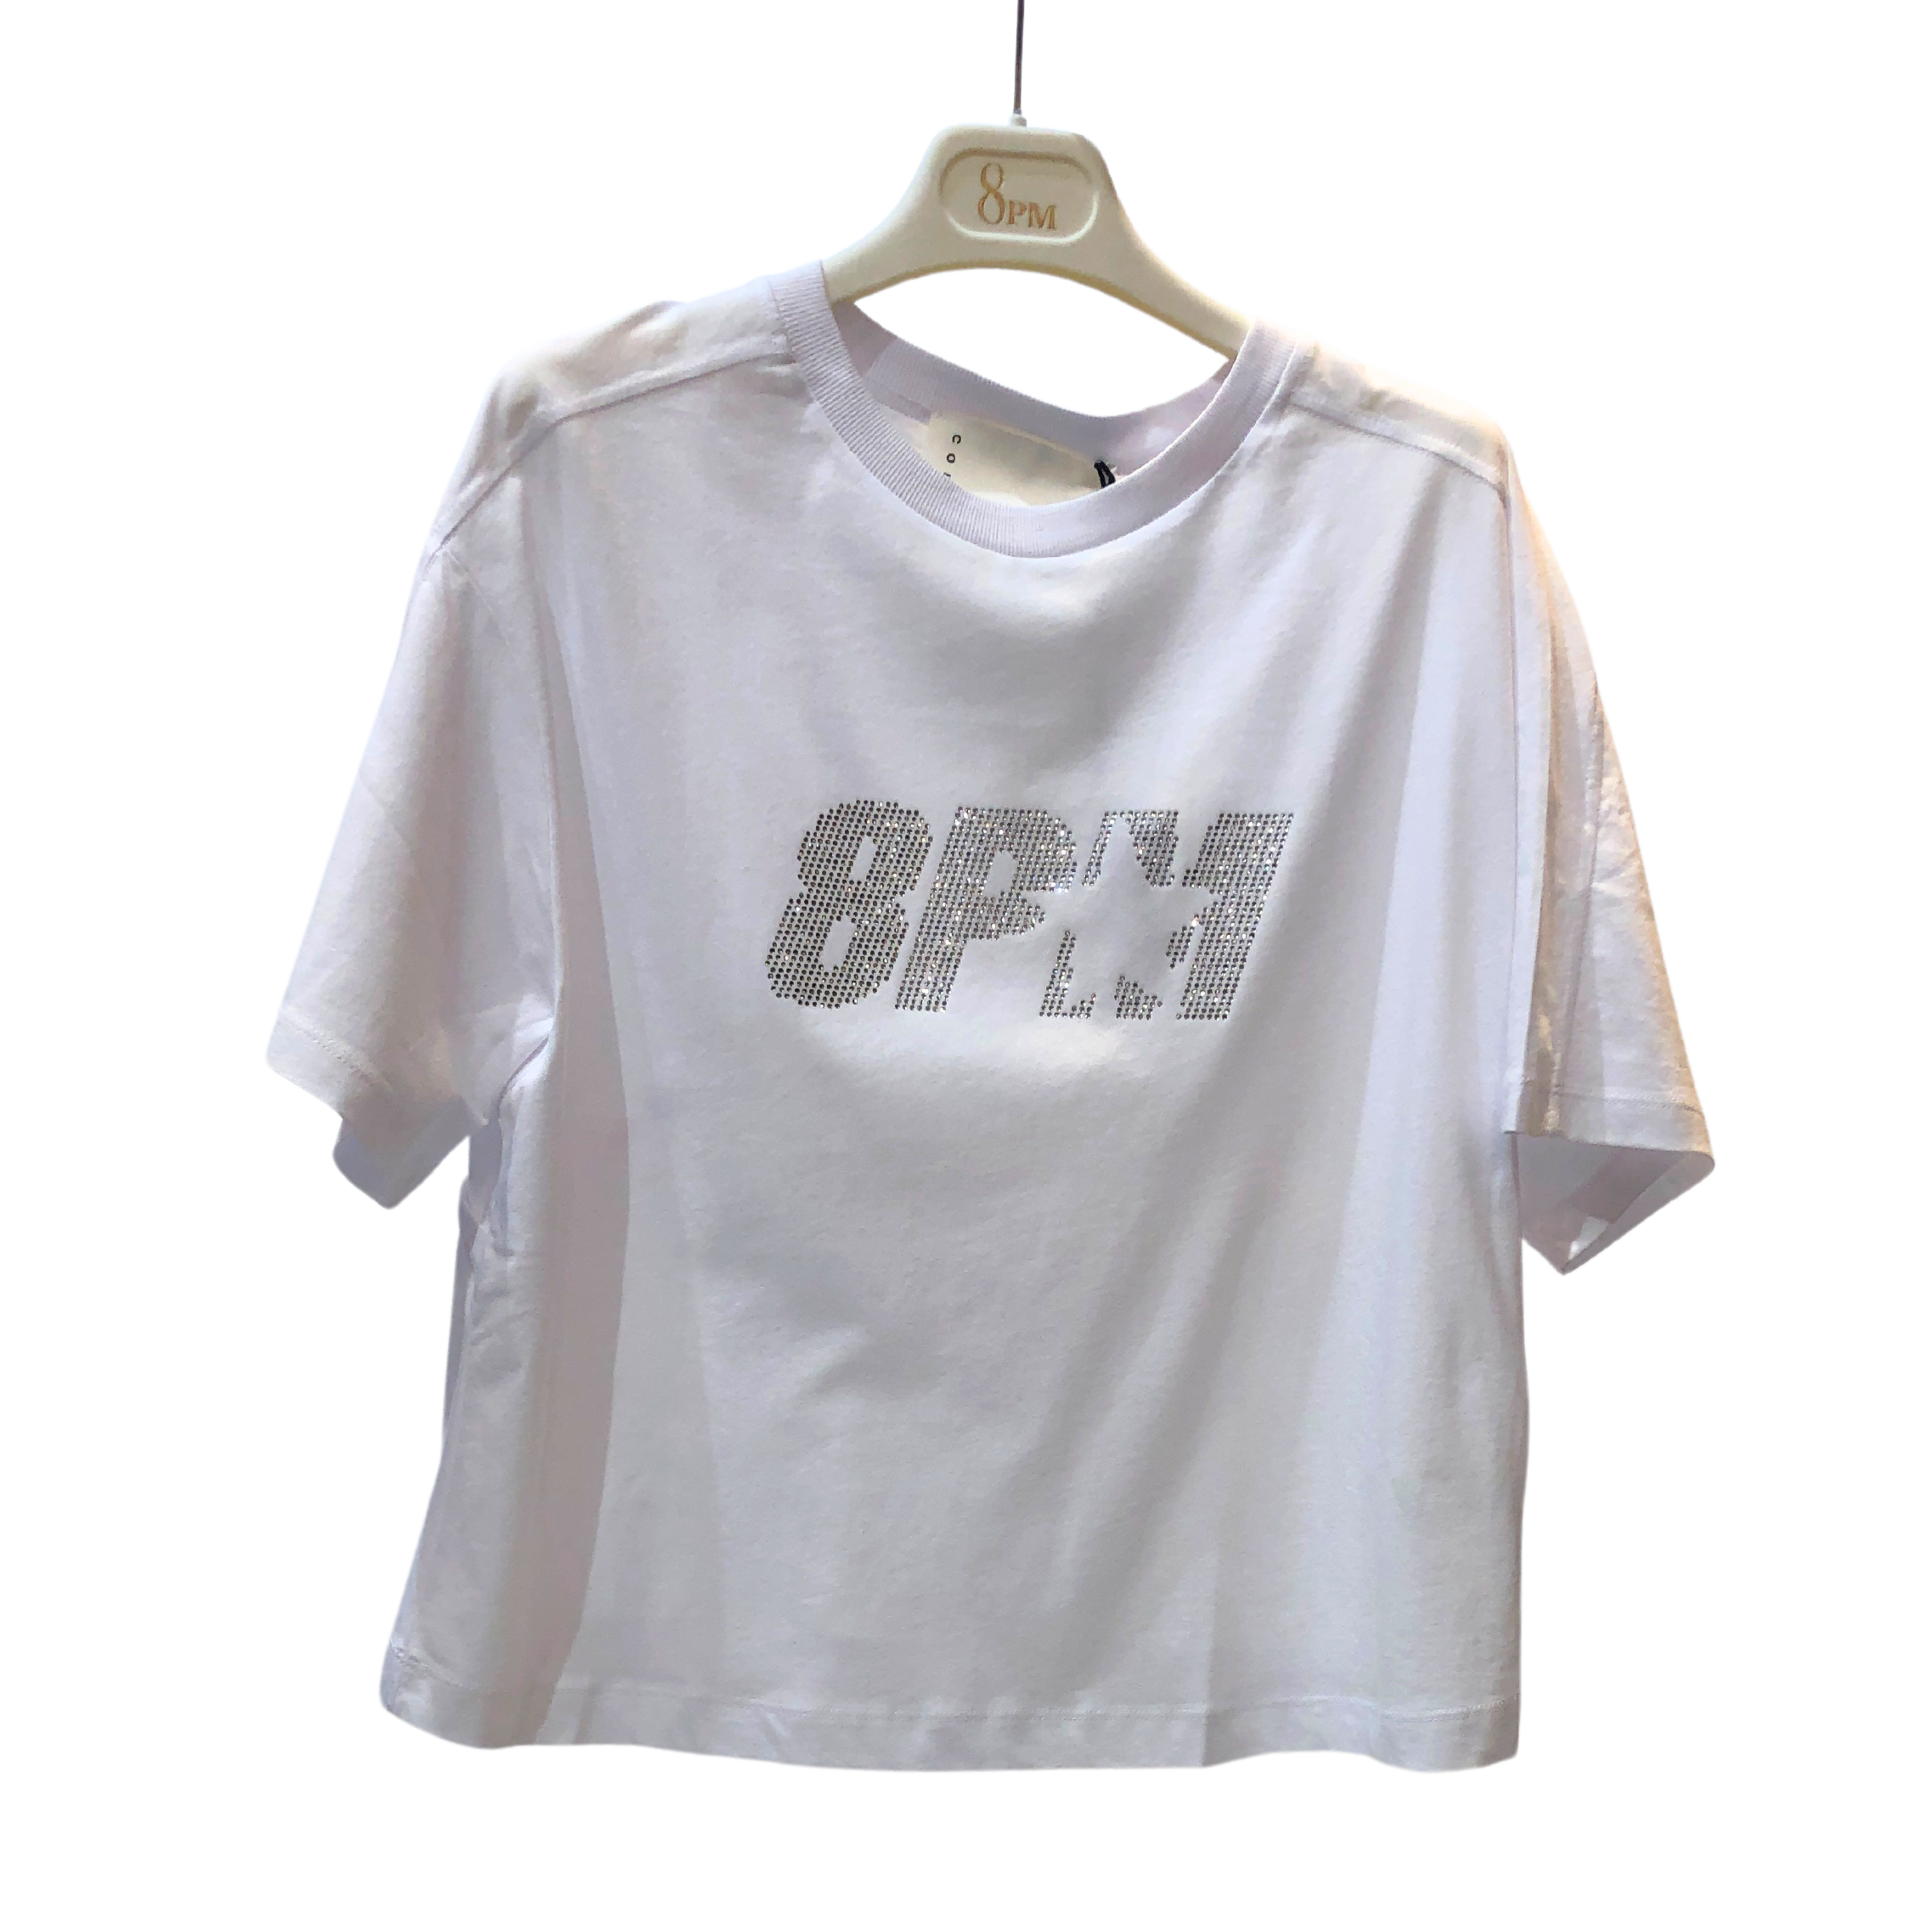 8 Pm Donna - T-Shirt